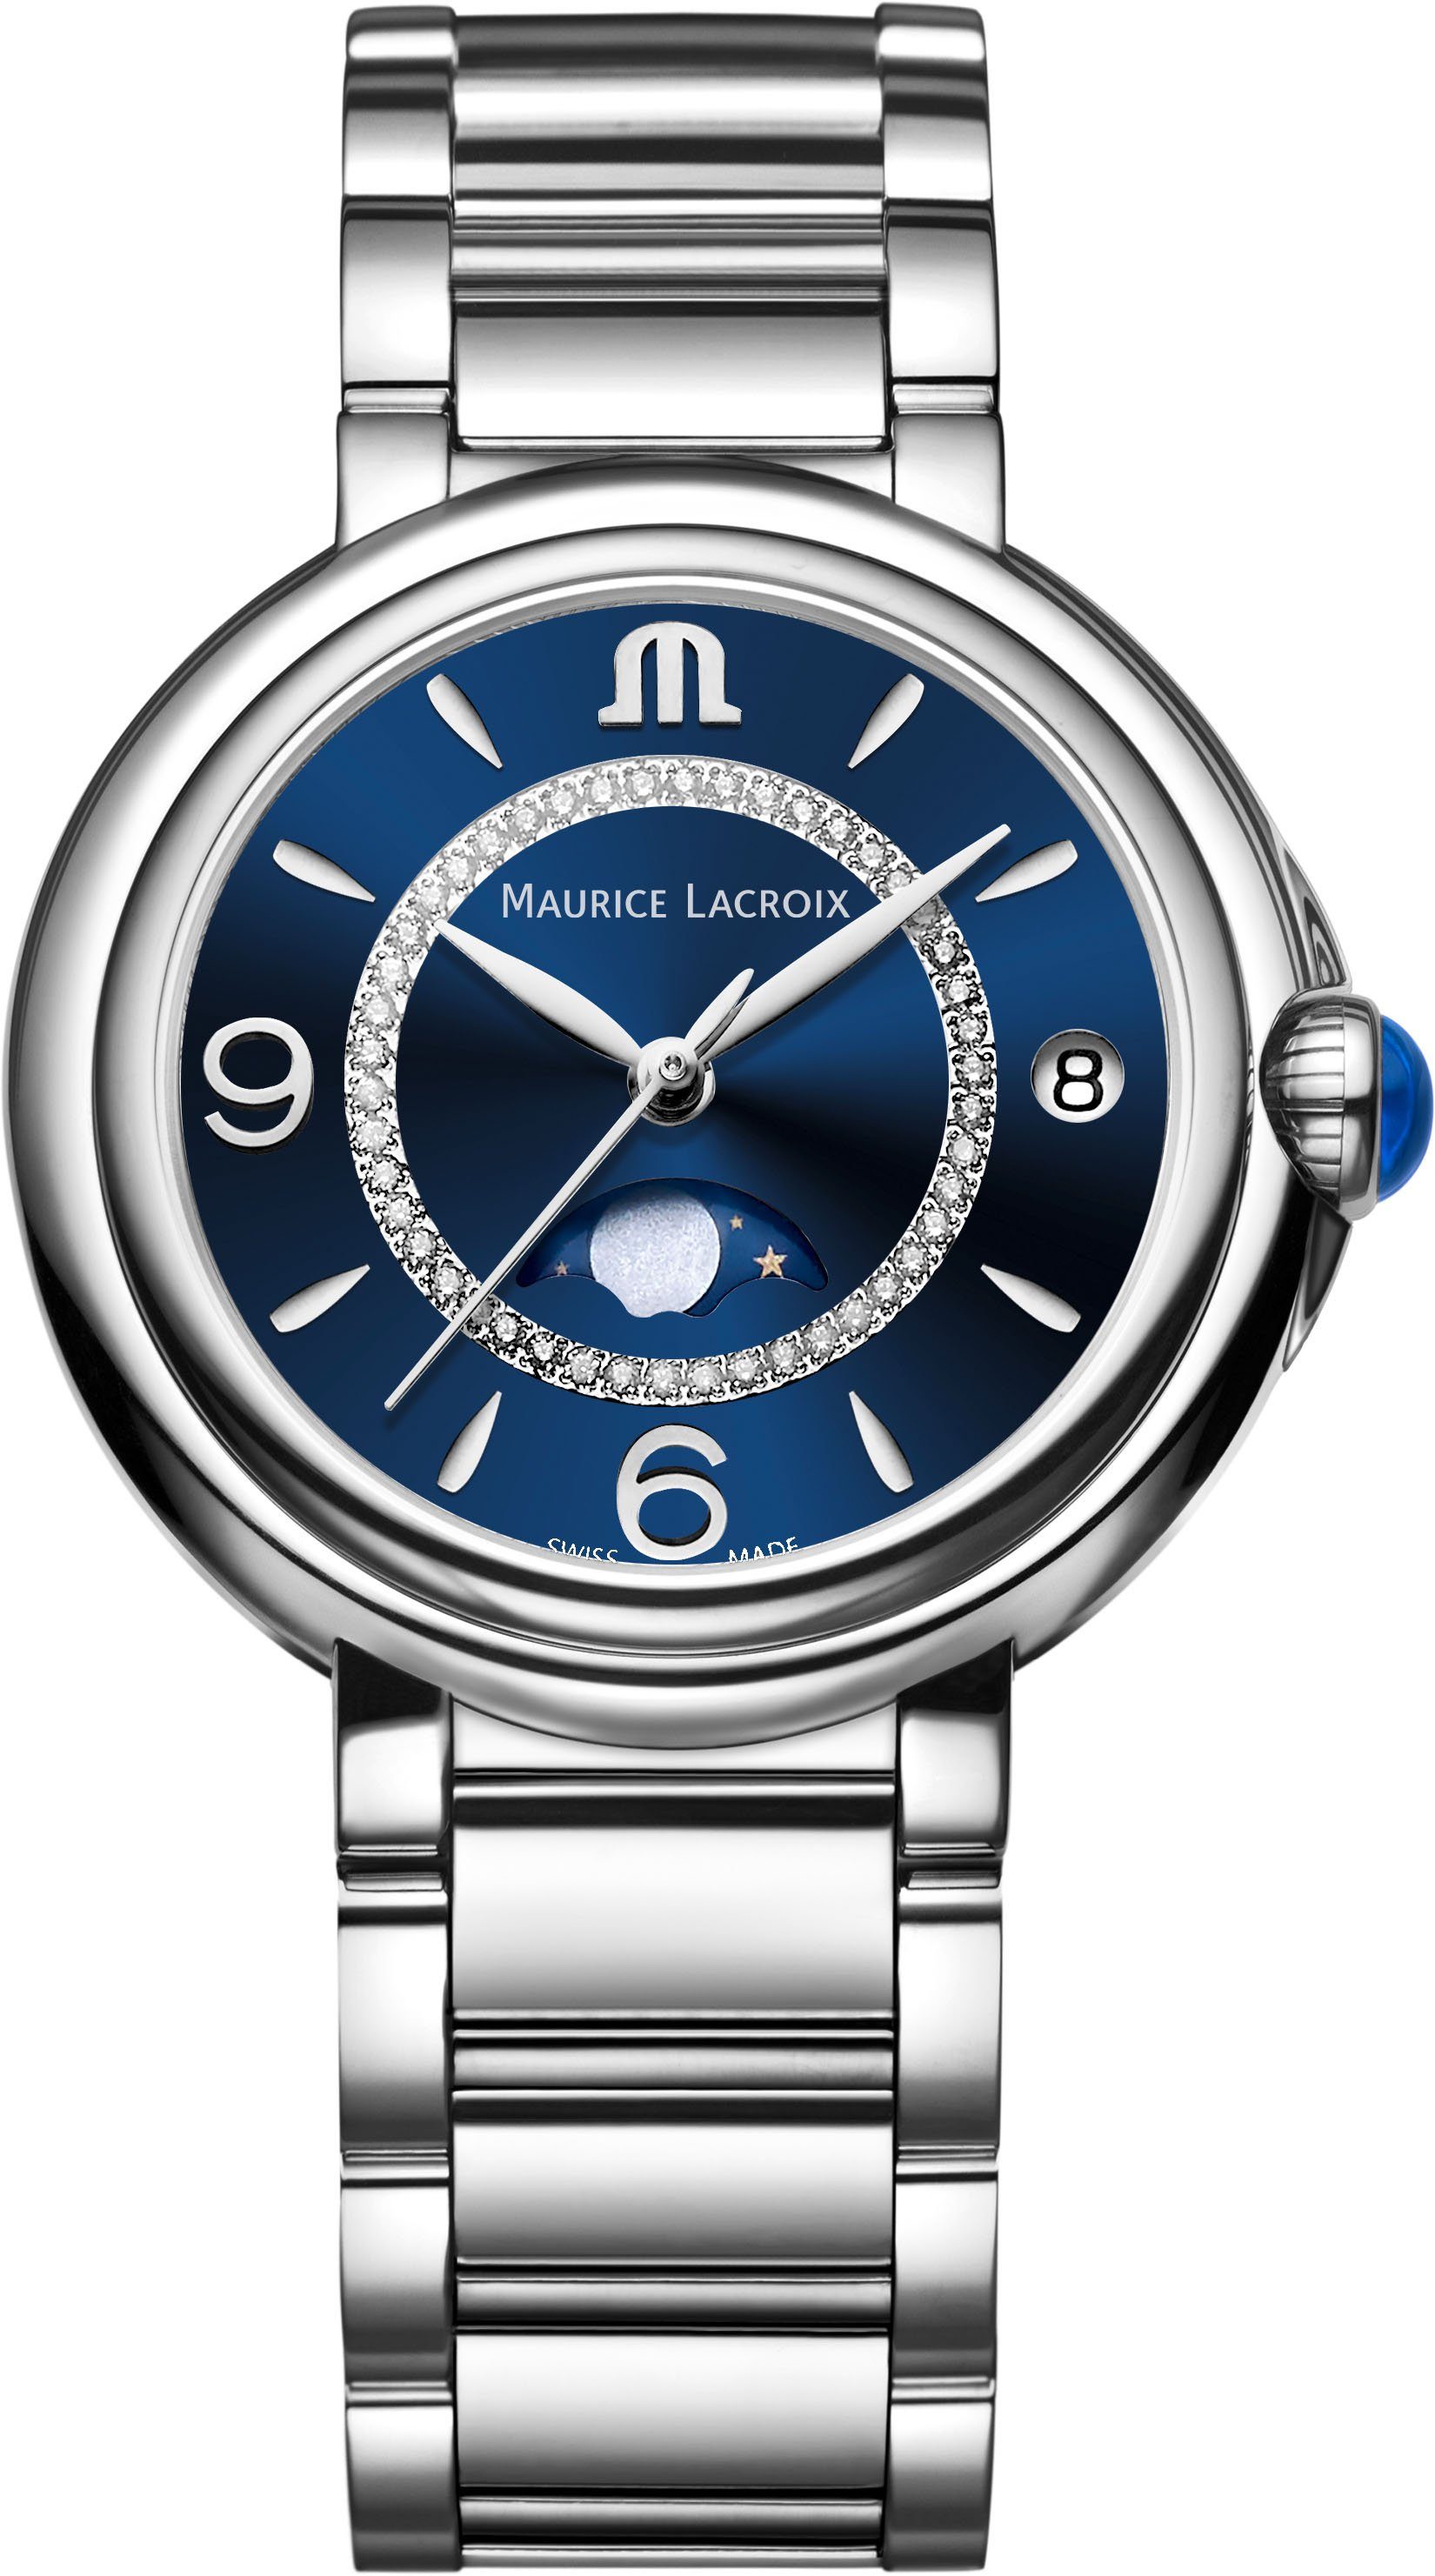 MAURICE LACROIX Schweizer Uhr FIABA MOONPHASE, FA1084-SS002-420-1, Diamanten, Mondphase